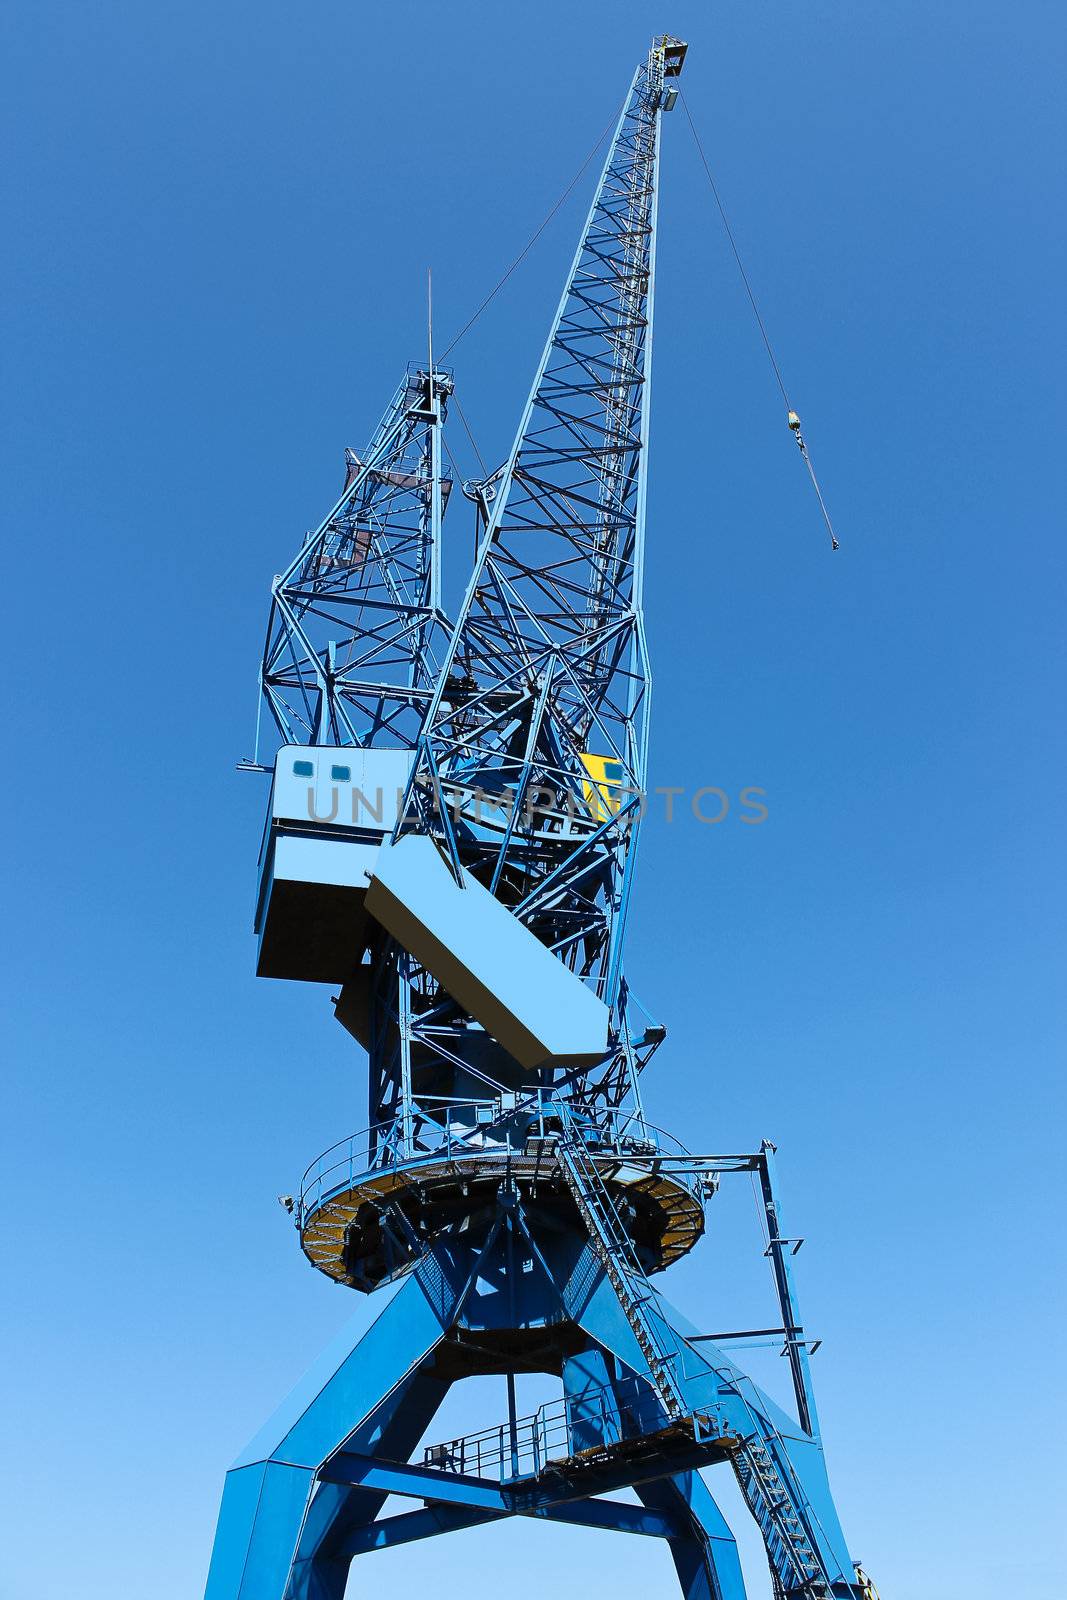 Shipyard crane against the blue sky by NickNick